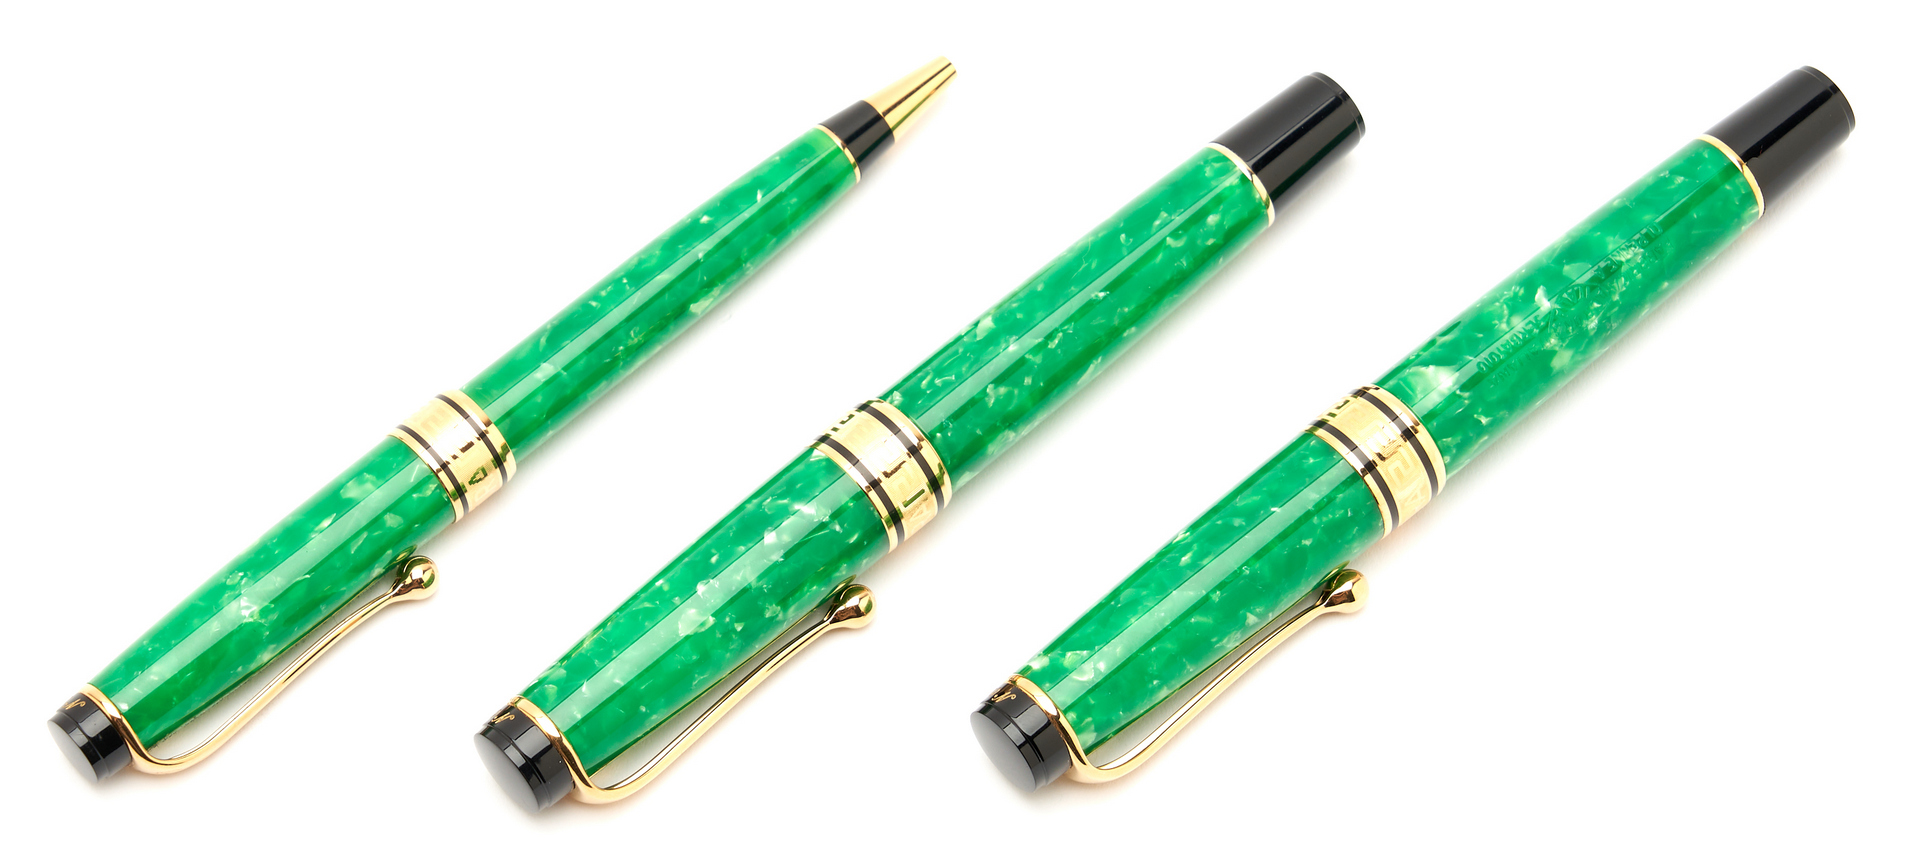 Lot 28: 6 Aurora Writing Instruments, incl. Fountain Pens w/ 18K Nibs